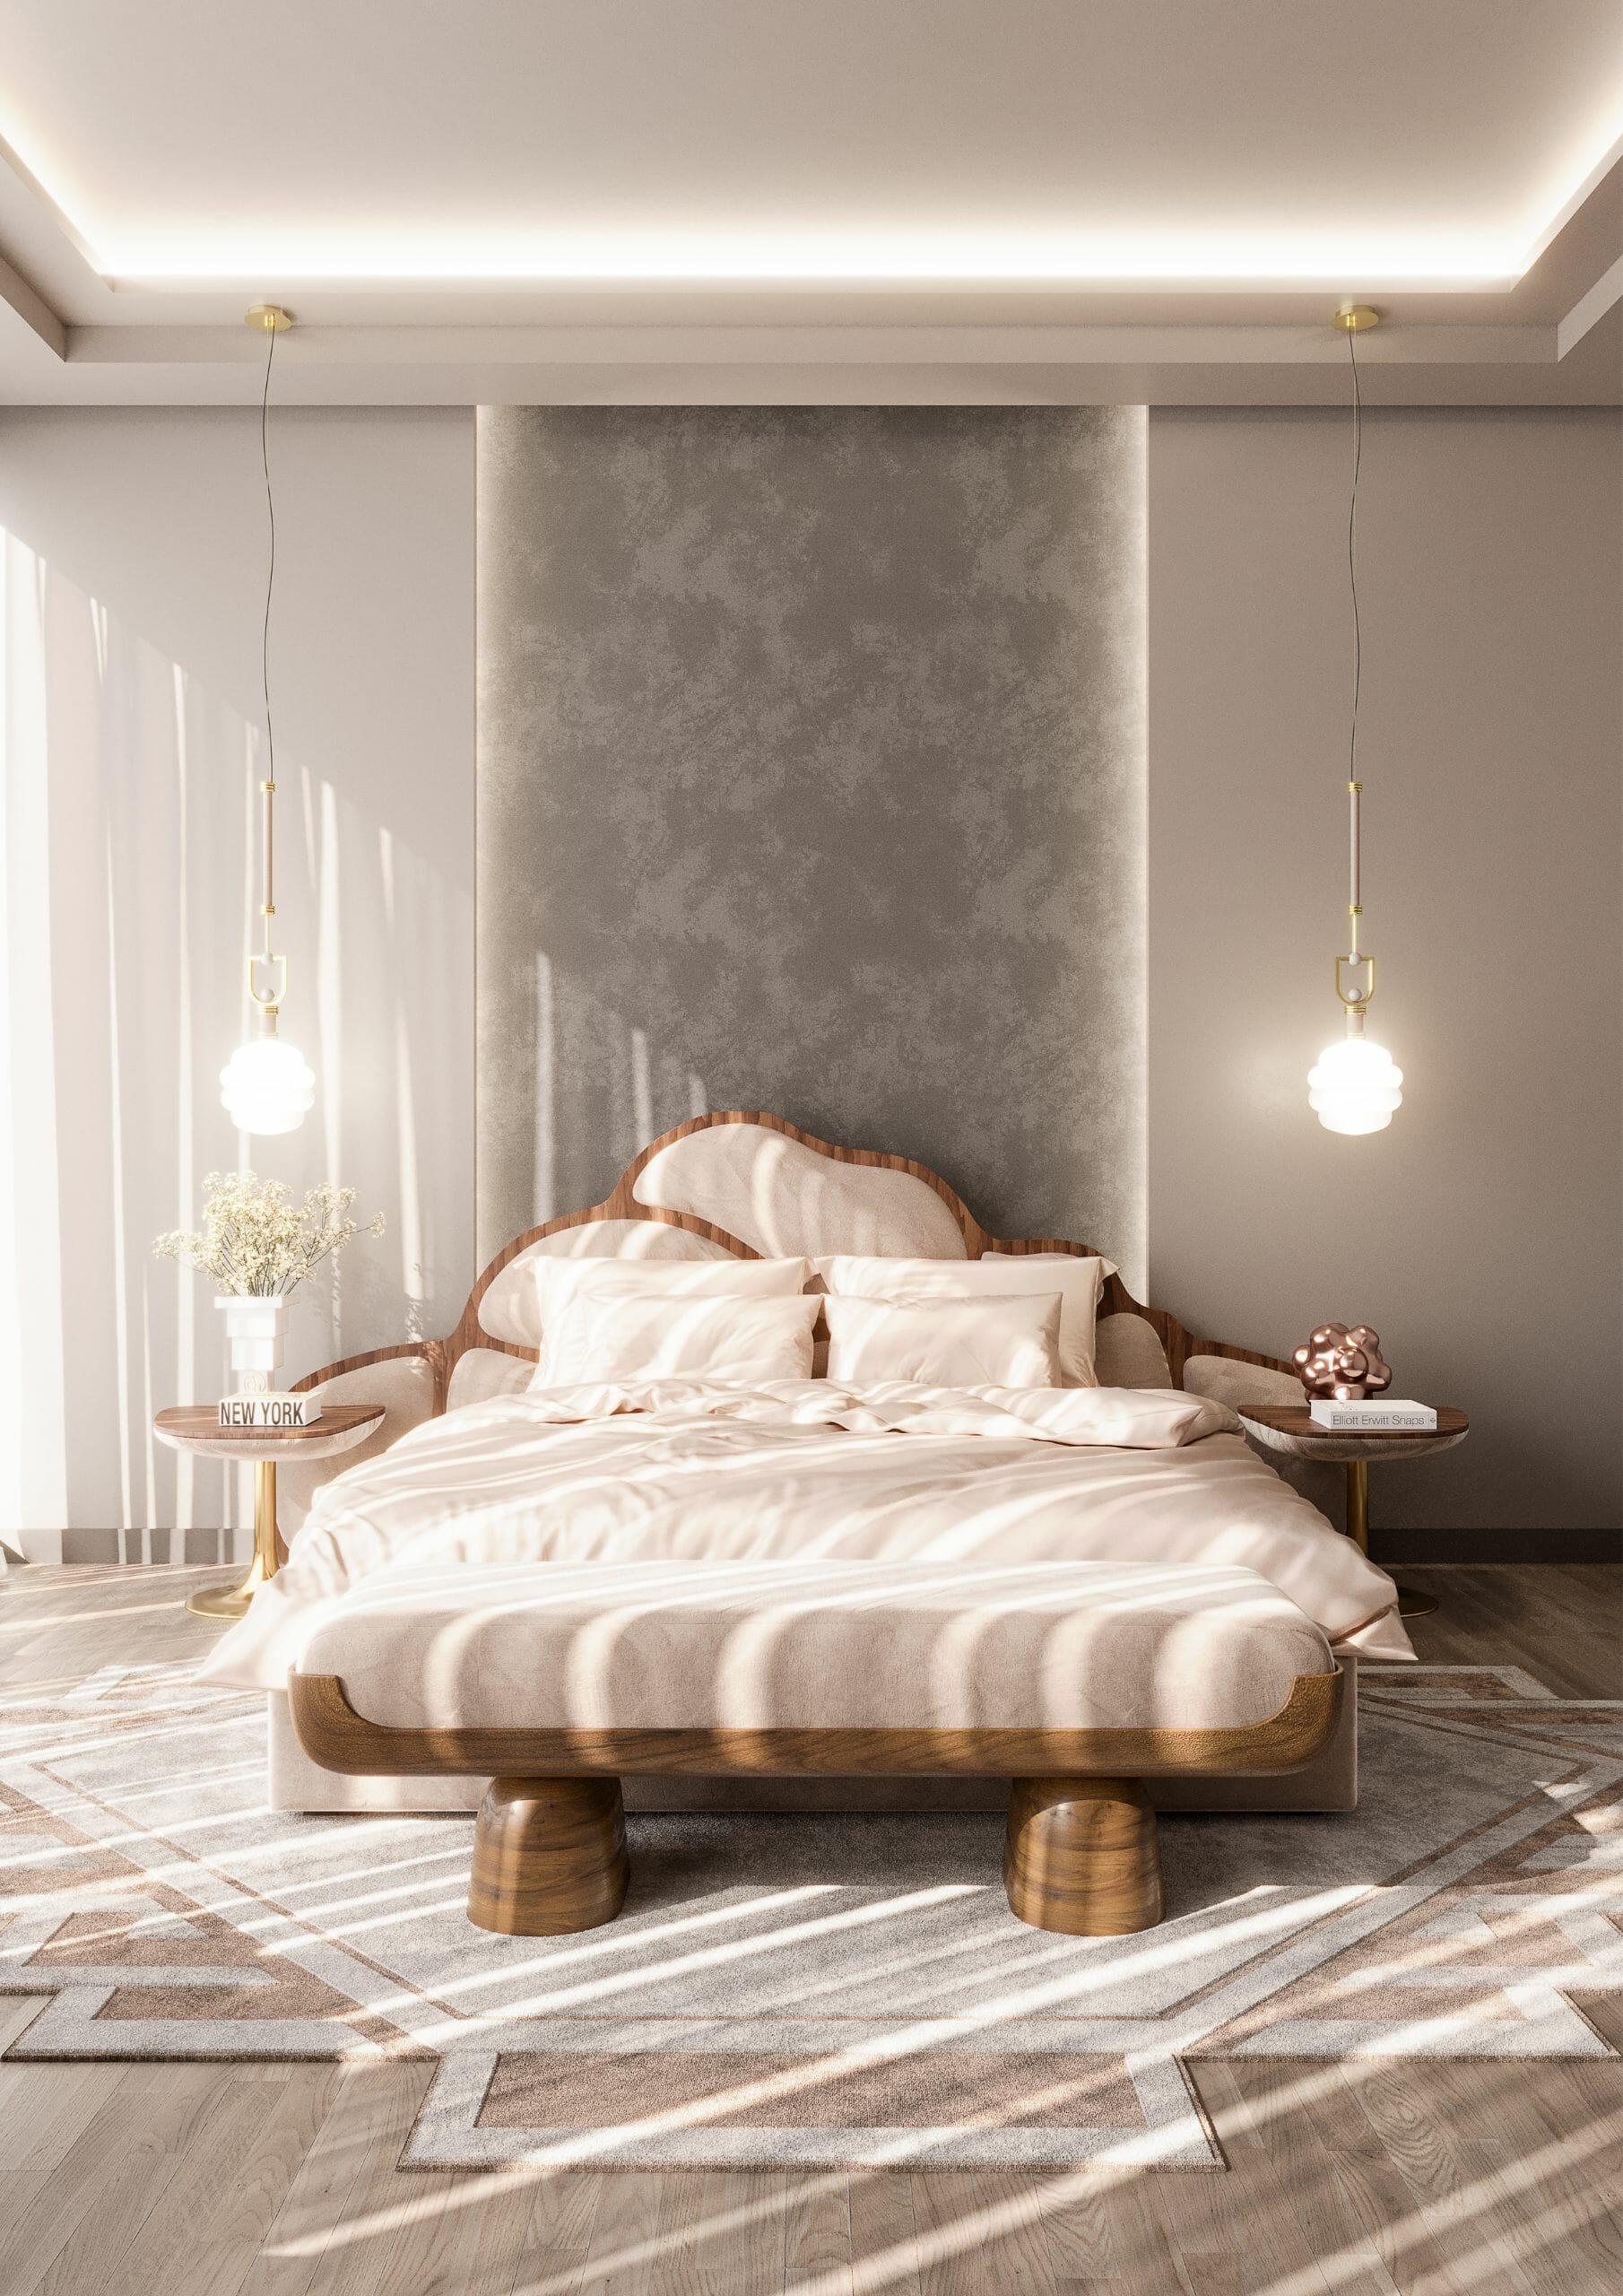 romantic bedroom decor in neutral colors